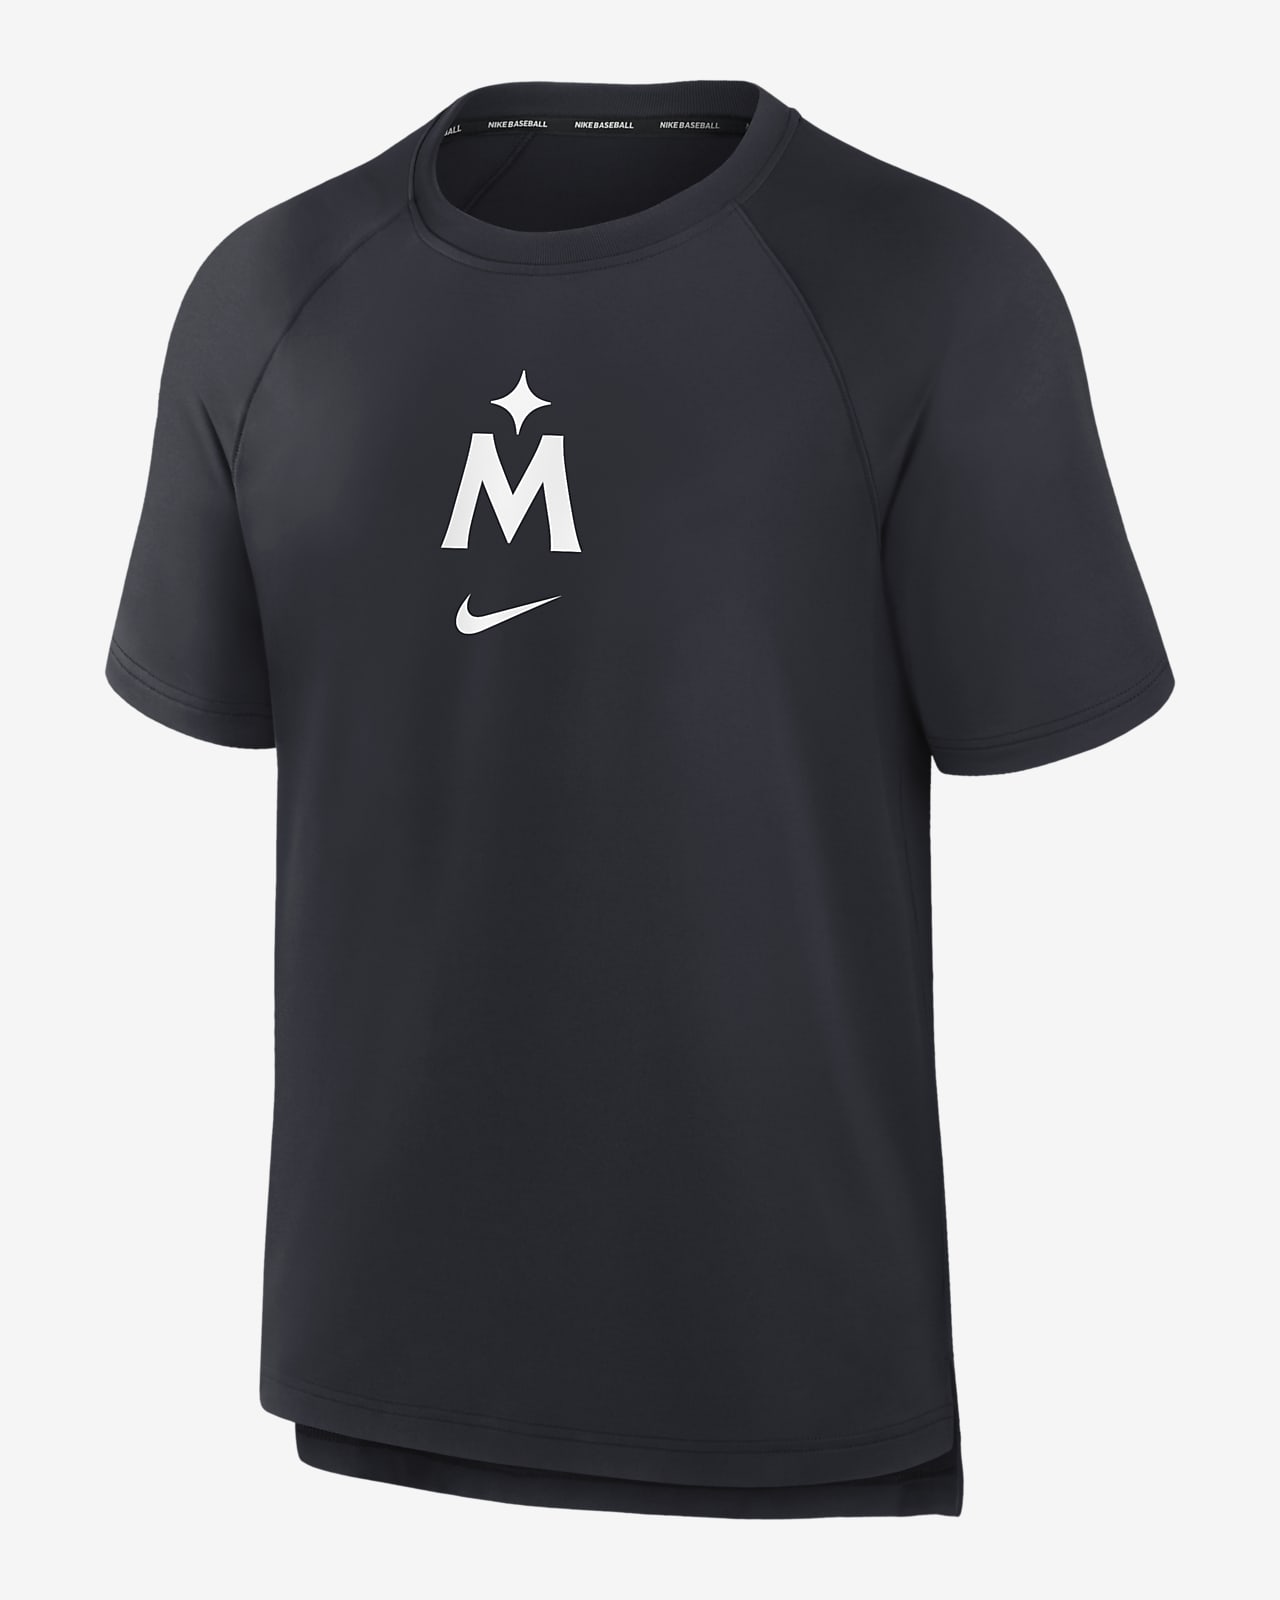 Minnesota Twins Authentic Collection Pregame Men's Nike Dri-FIT MLB T-Shirt